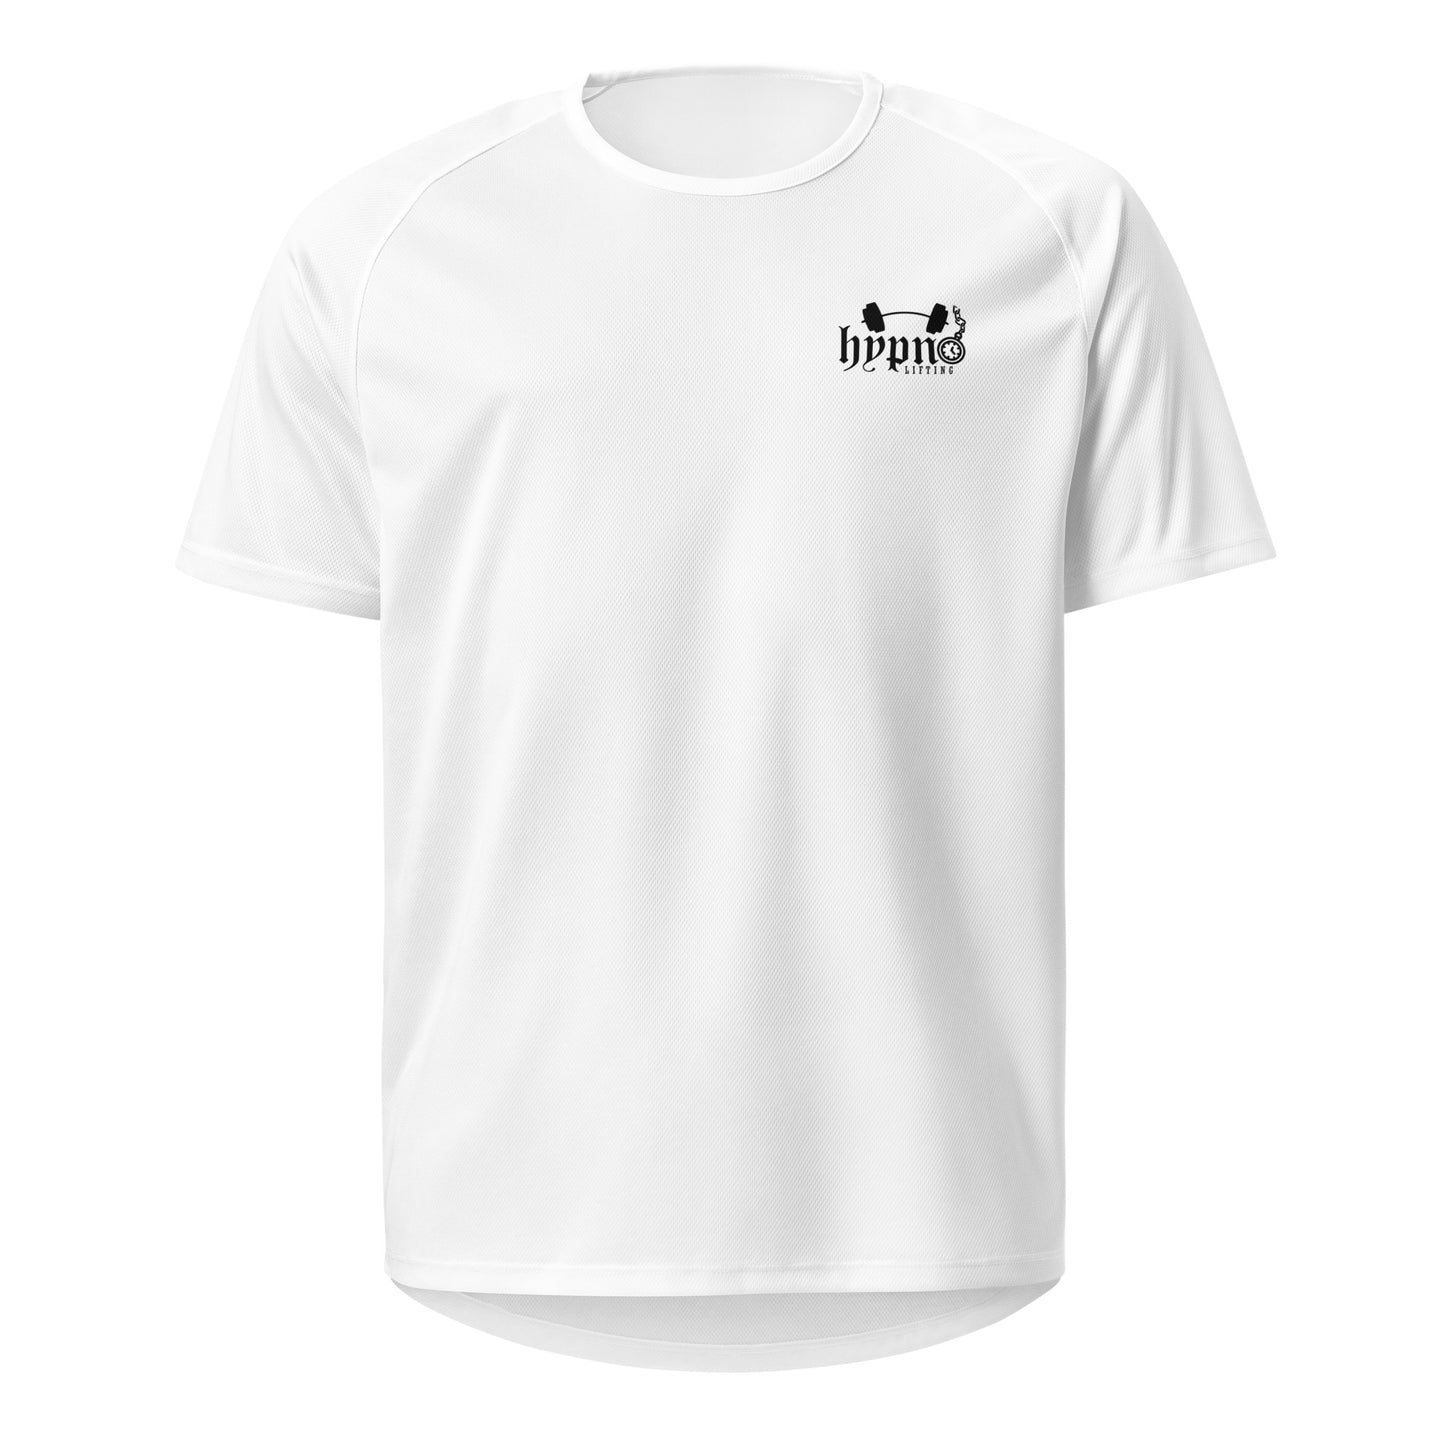 Hypno Lifting Unisex Athletic T-Shirt (Black Logo)